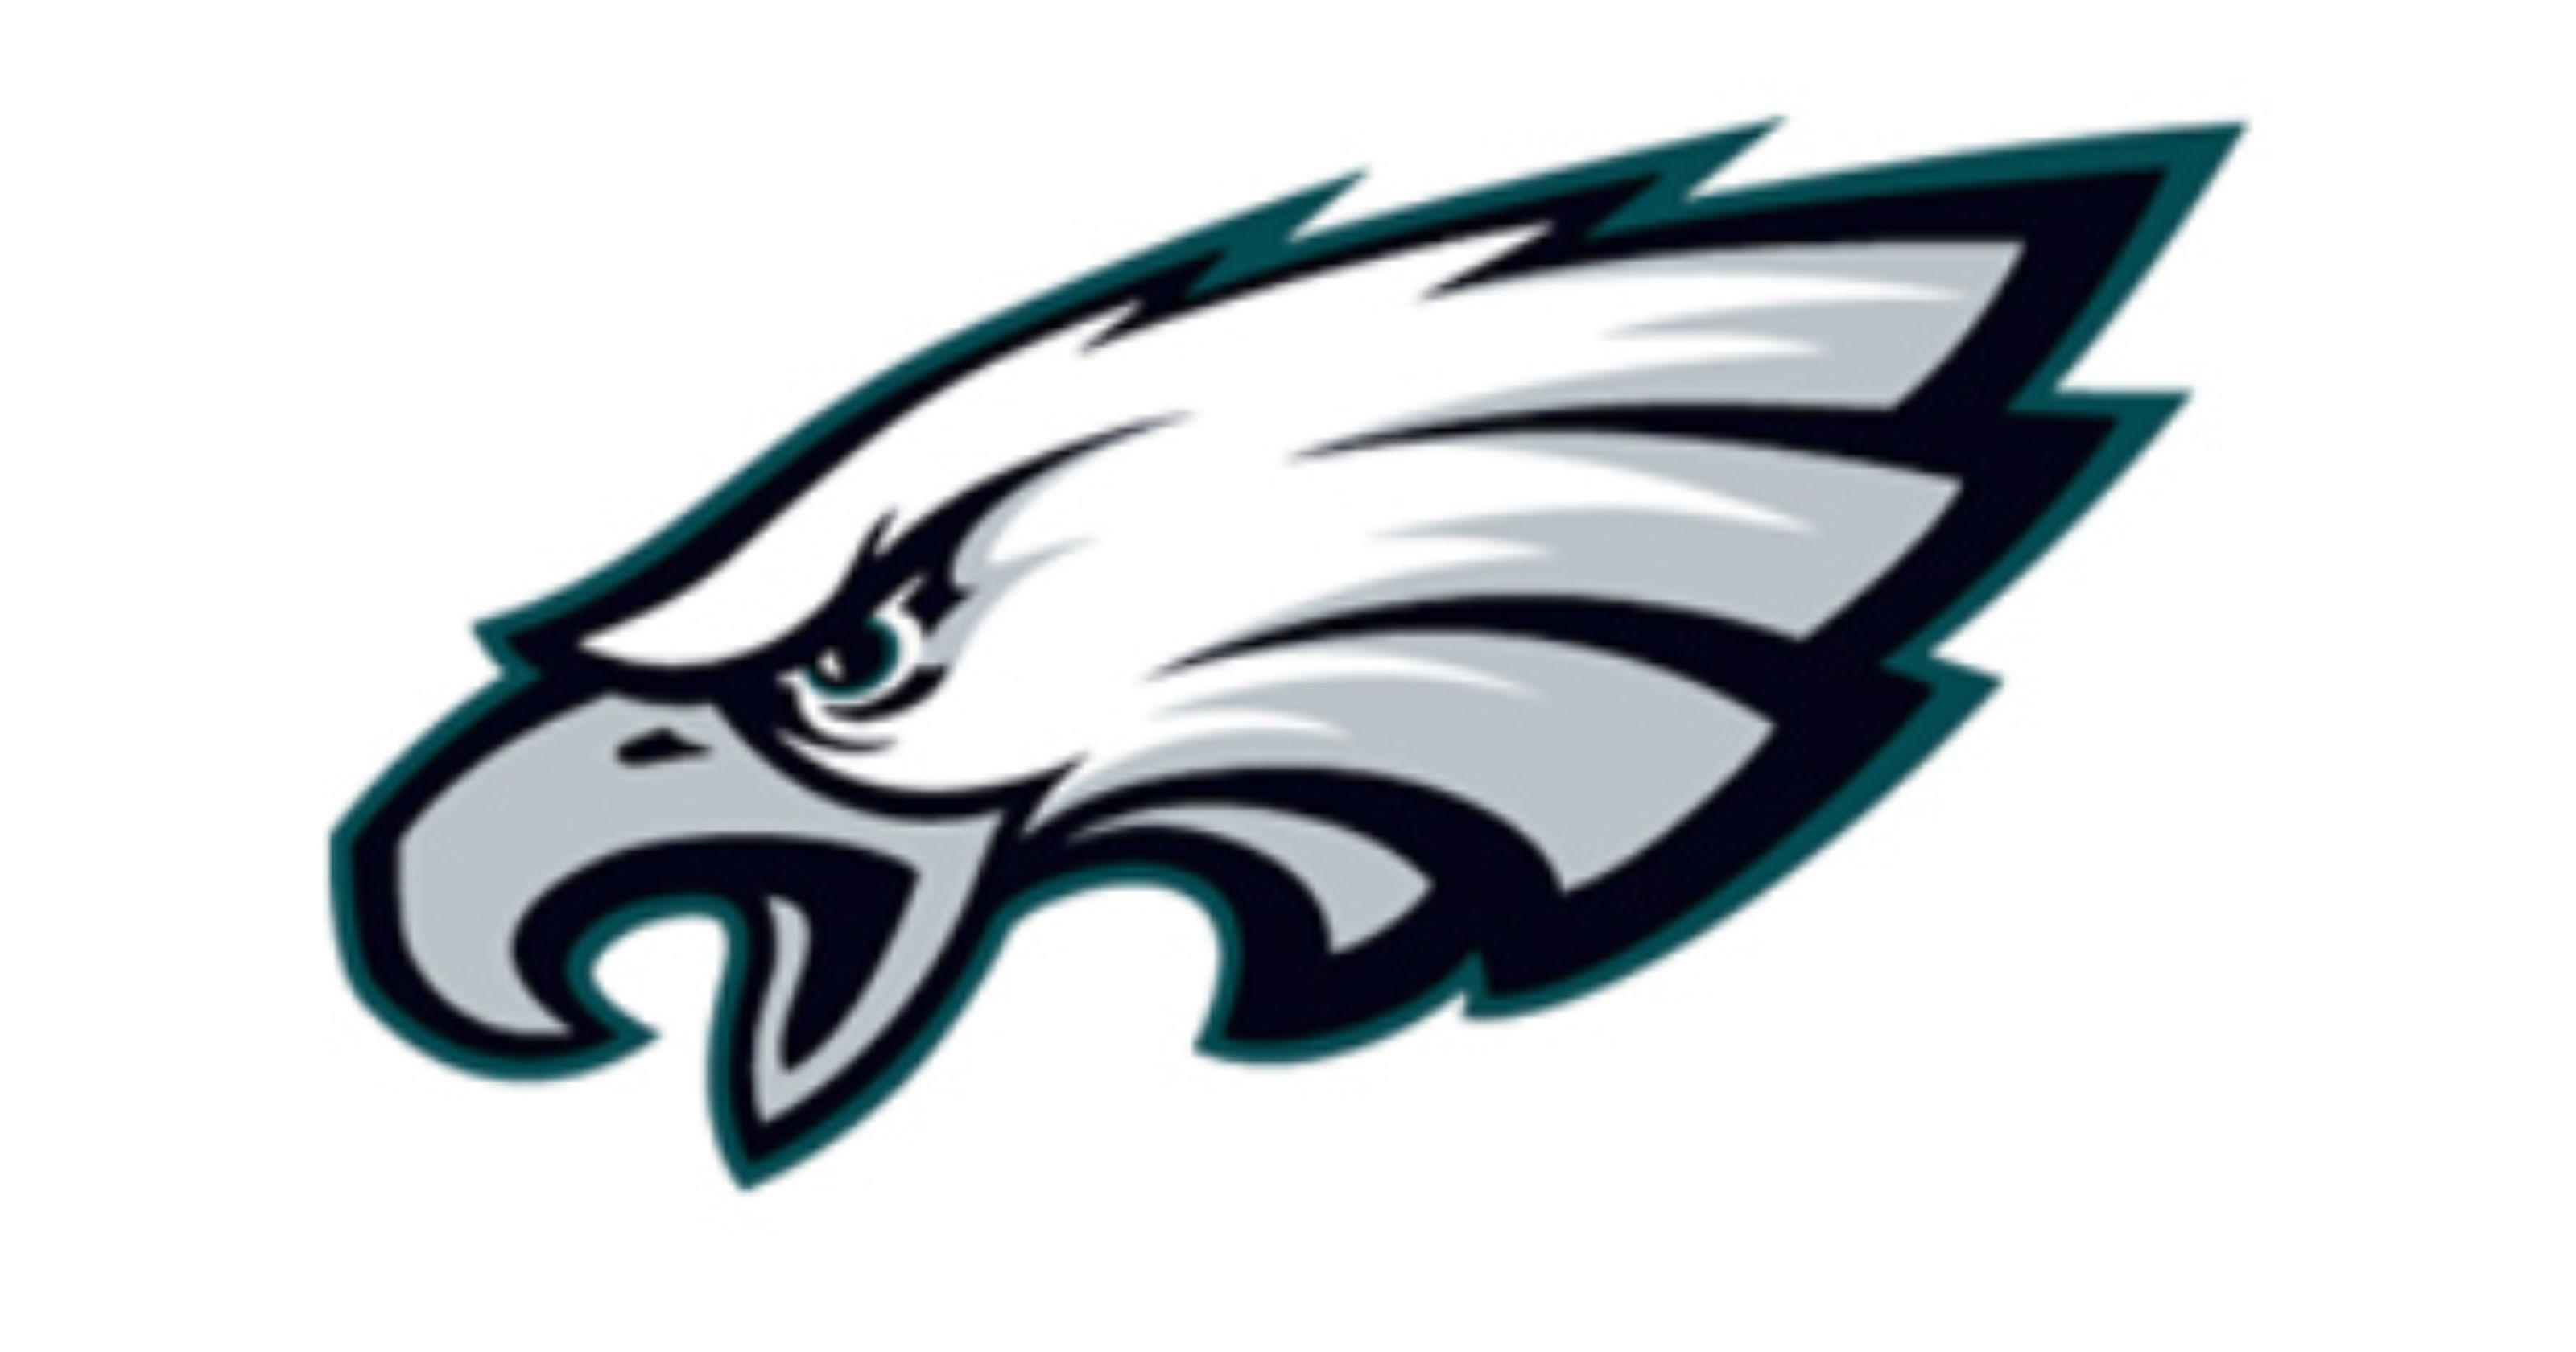 Free Eagles Logo Png, Downloa